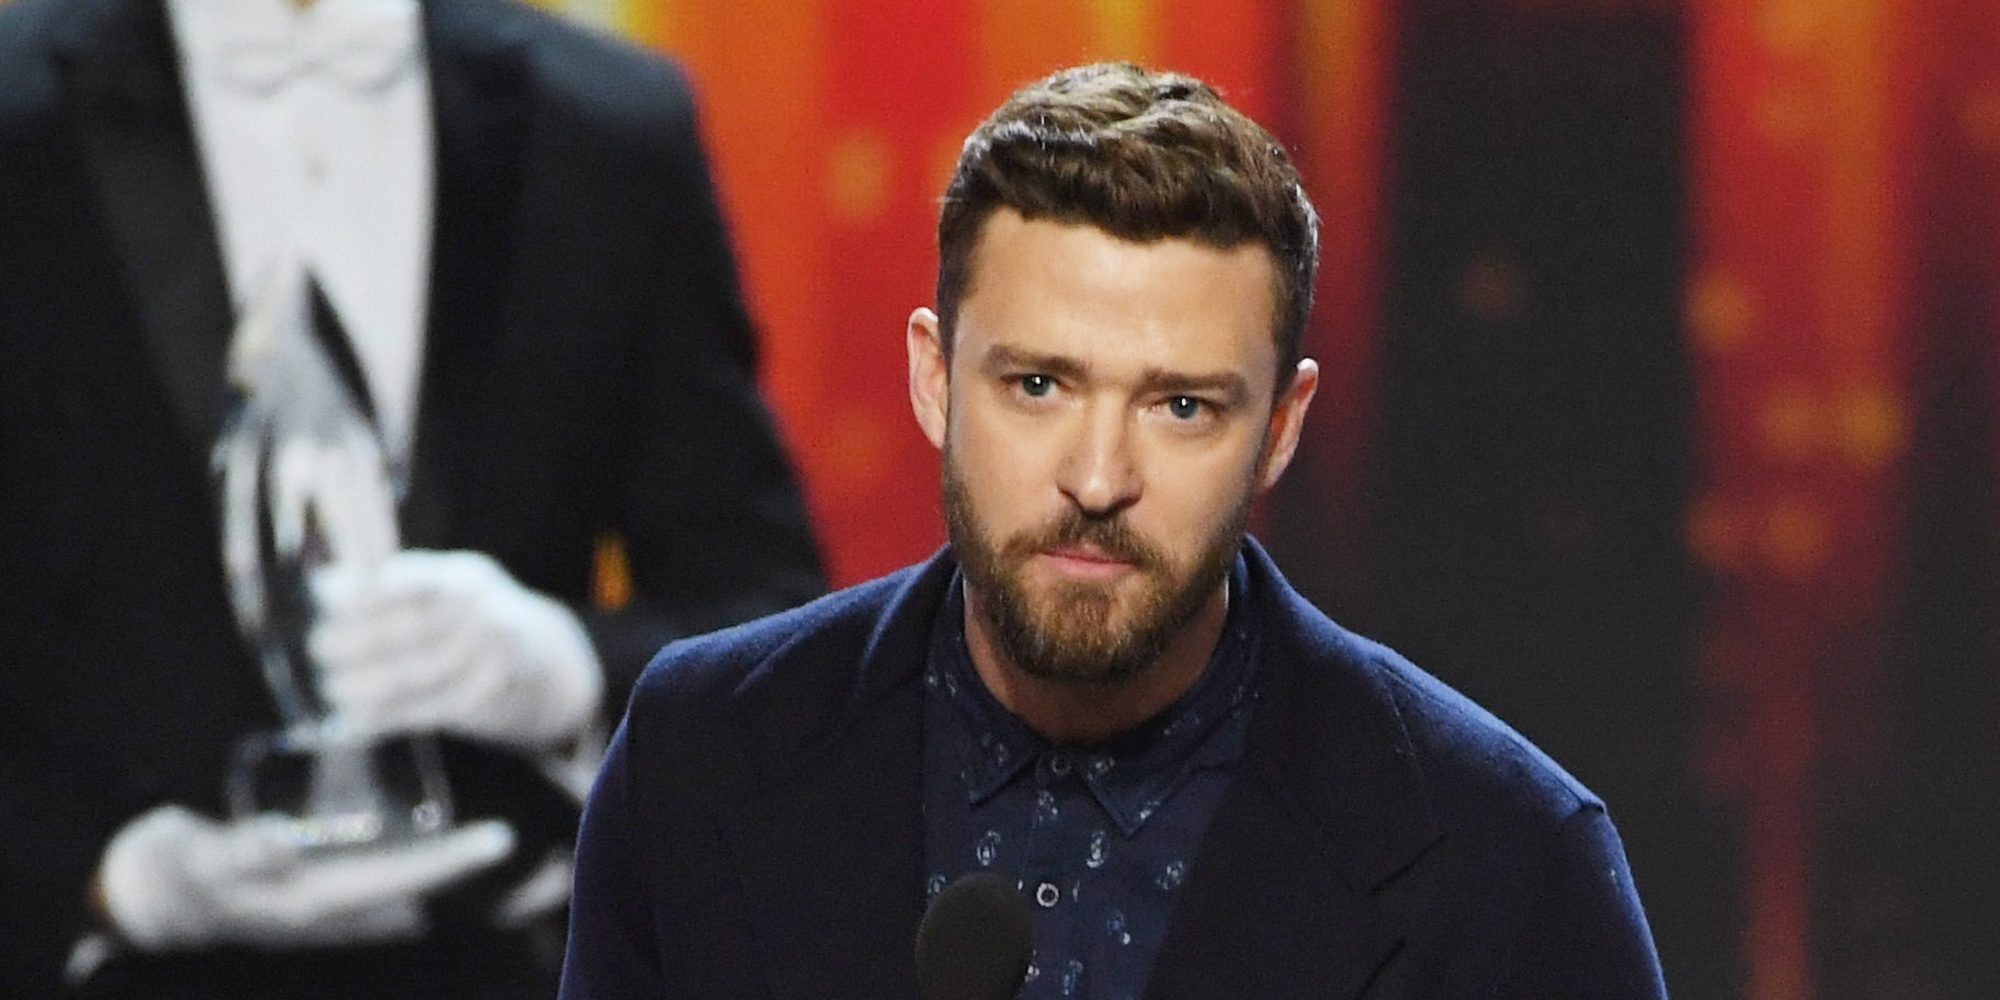 Justin Timberlake cantará en el intermedio de la Super Bowl 2018